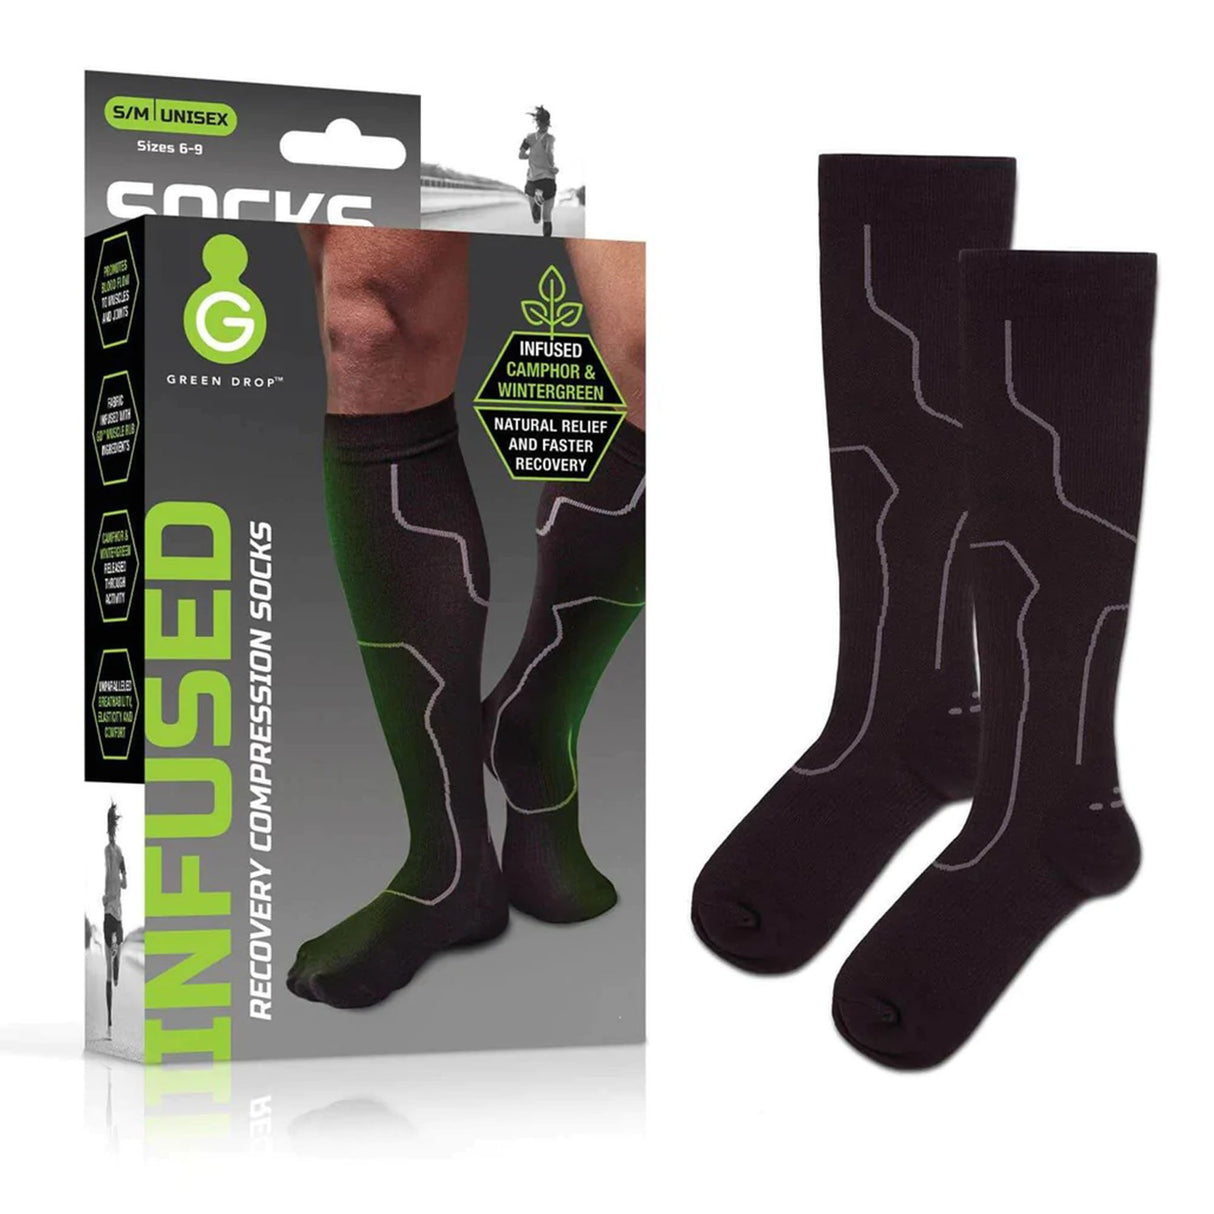 Green Drop Compression Socks - Medical-Grade Infused Support, S/M